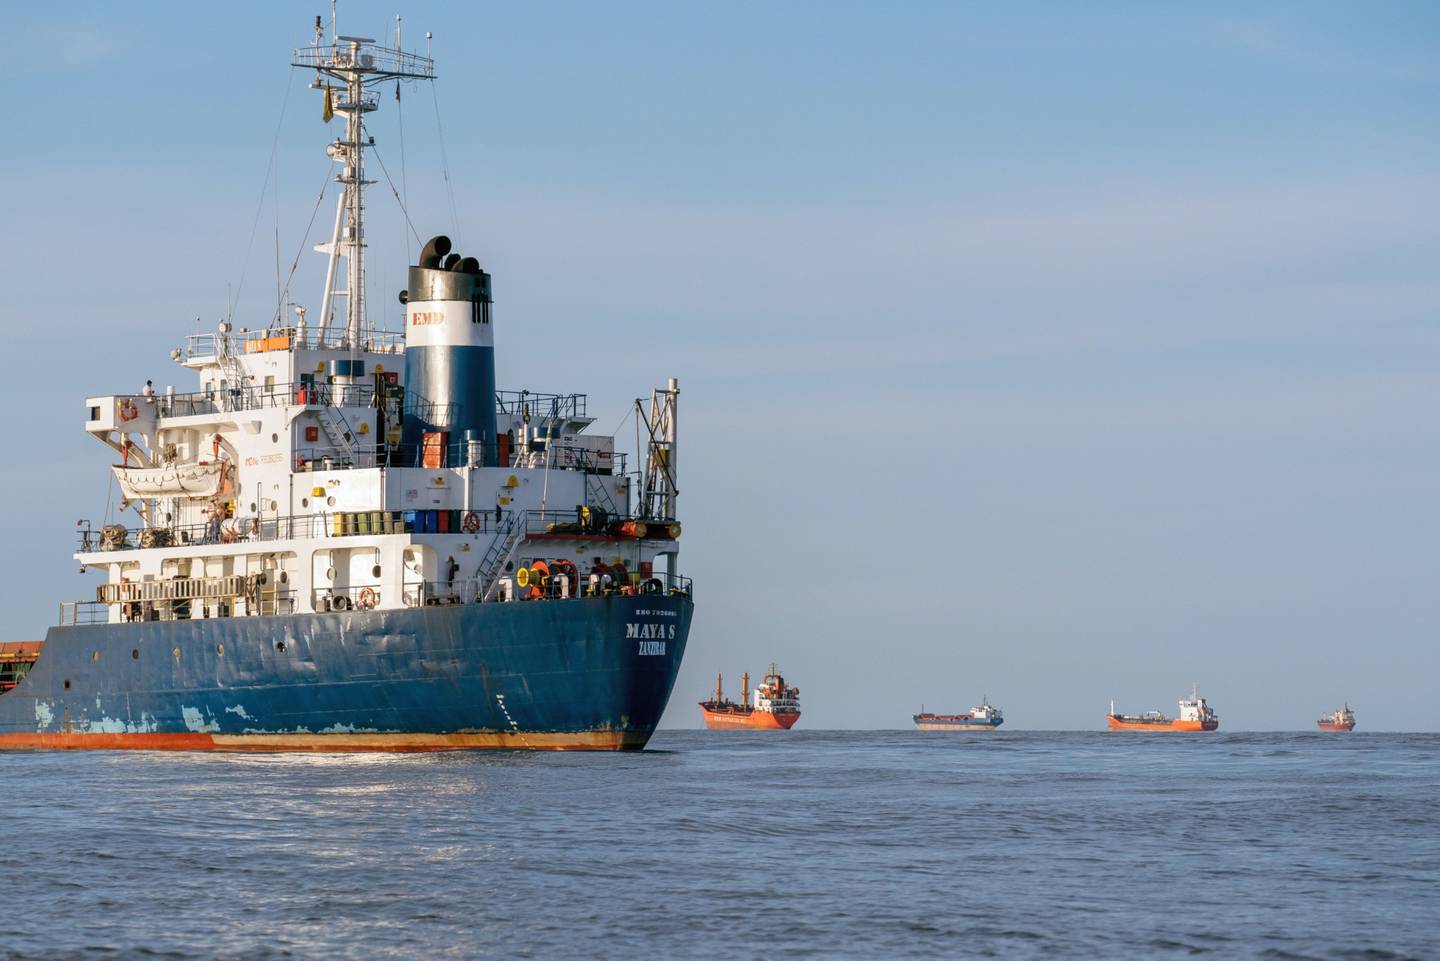 Black Sea cargo ships usually handle the majority of Ukraine's food exports. Bloomberg 